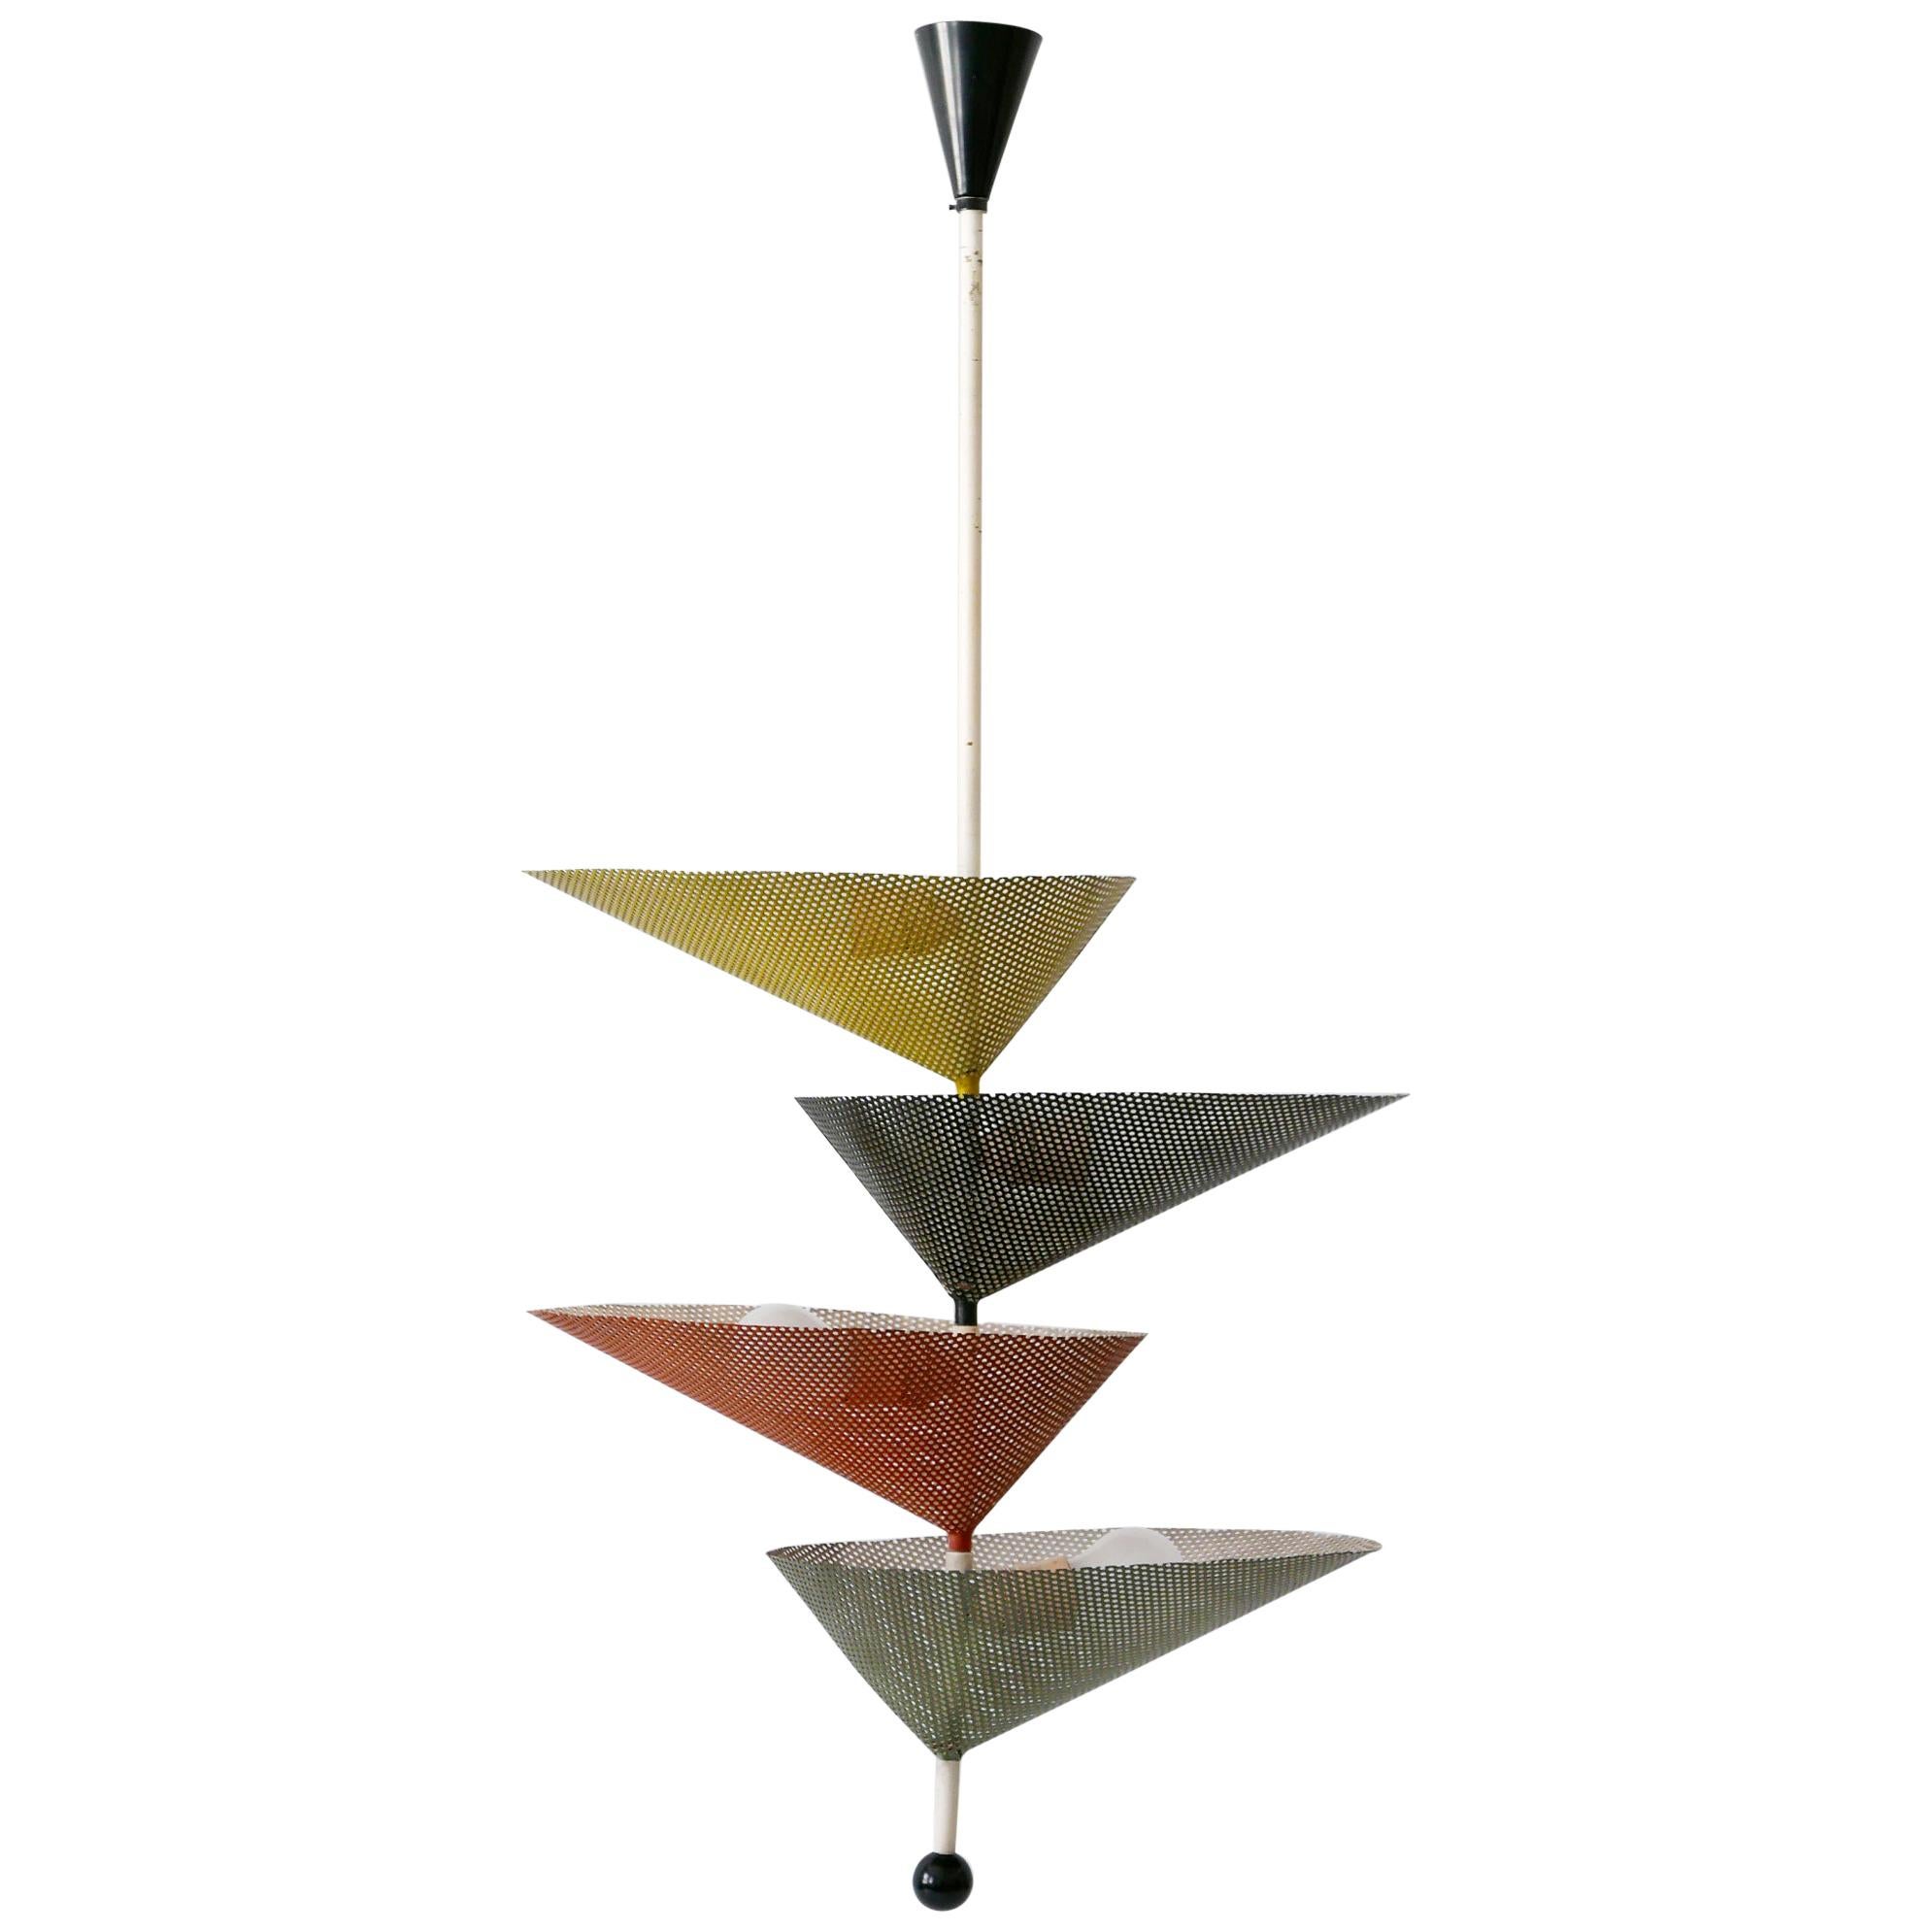 Rare Mid-Century Modern Chandelier or Pendant Lamp by Mathieu Matégot 1950s For Sale